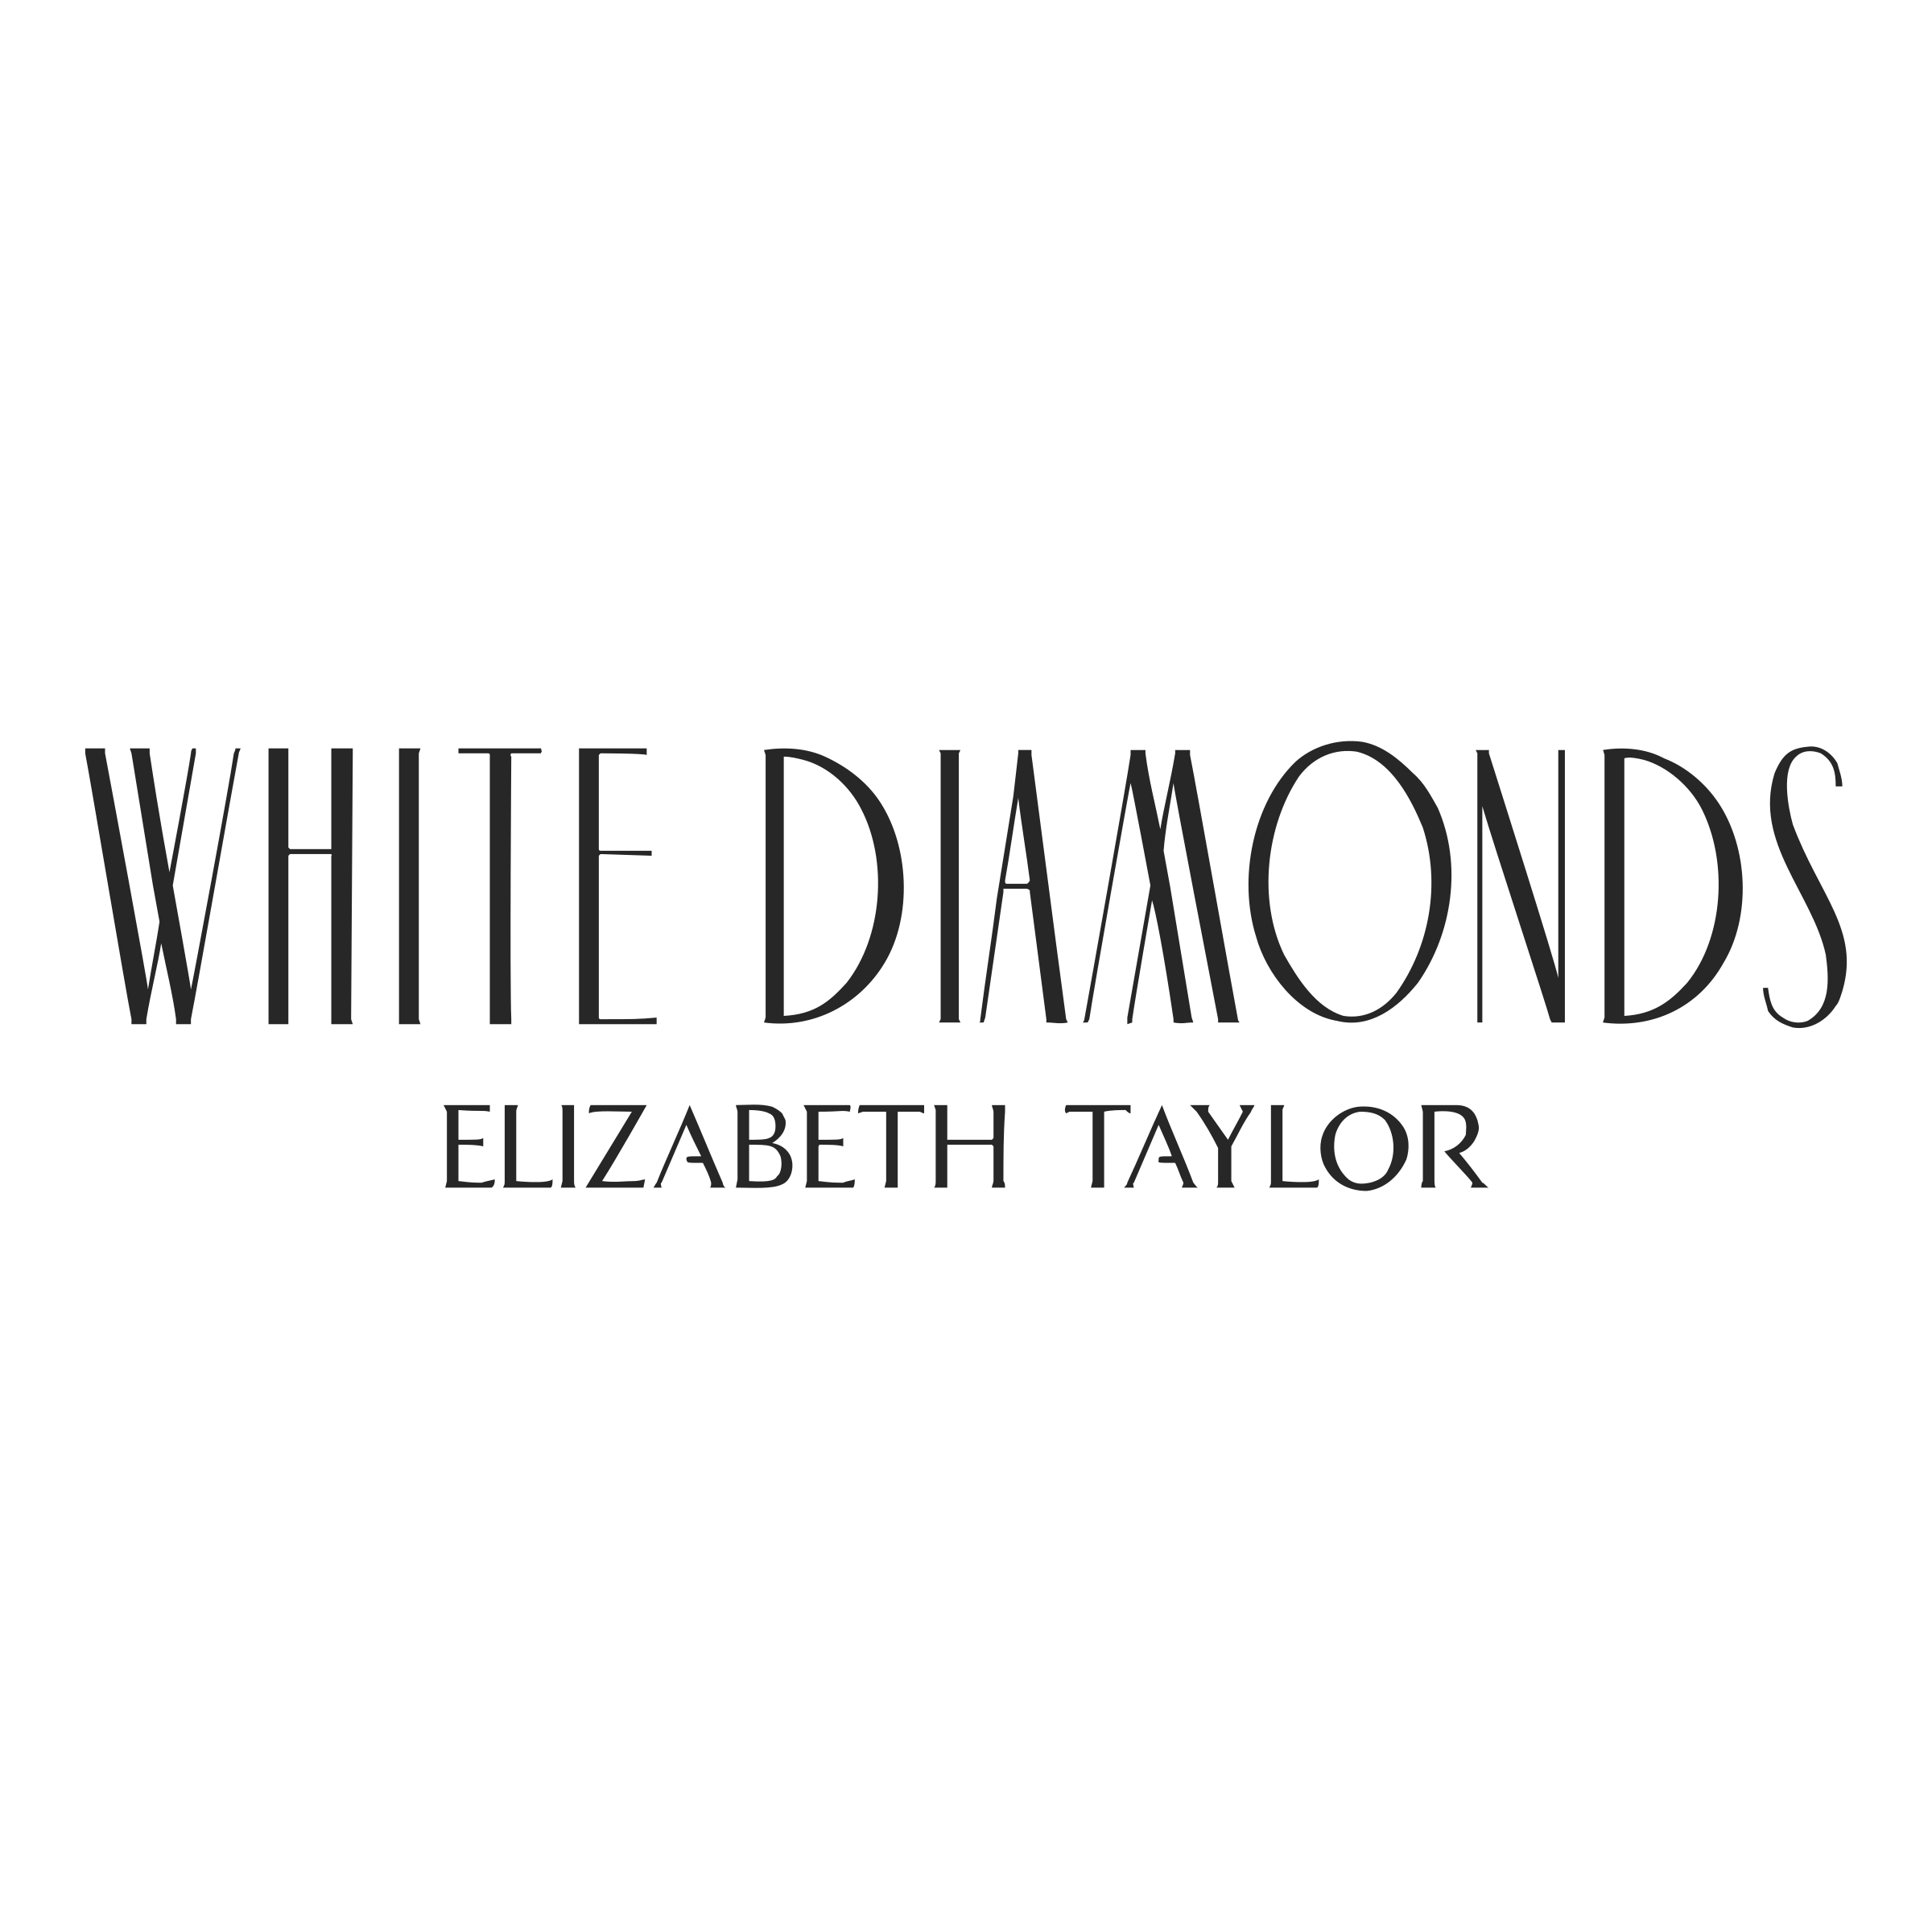 White Diamonds Logo - White Diamonds Logo PNG Transparent & SVG Vector